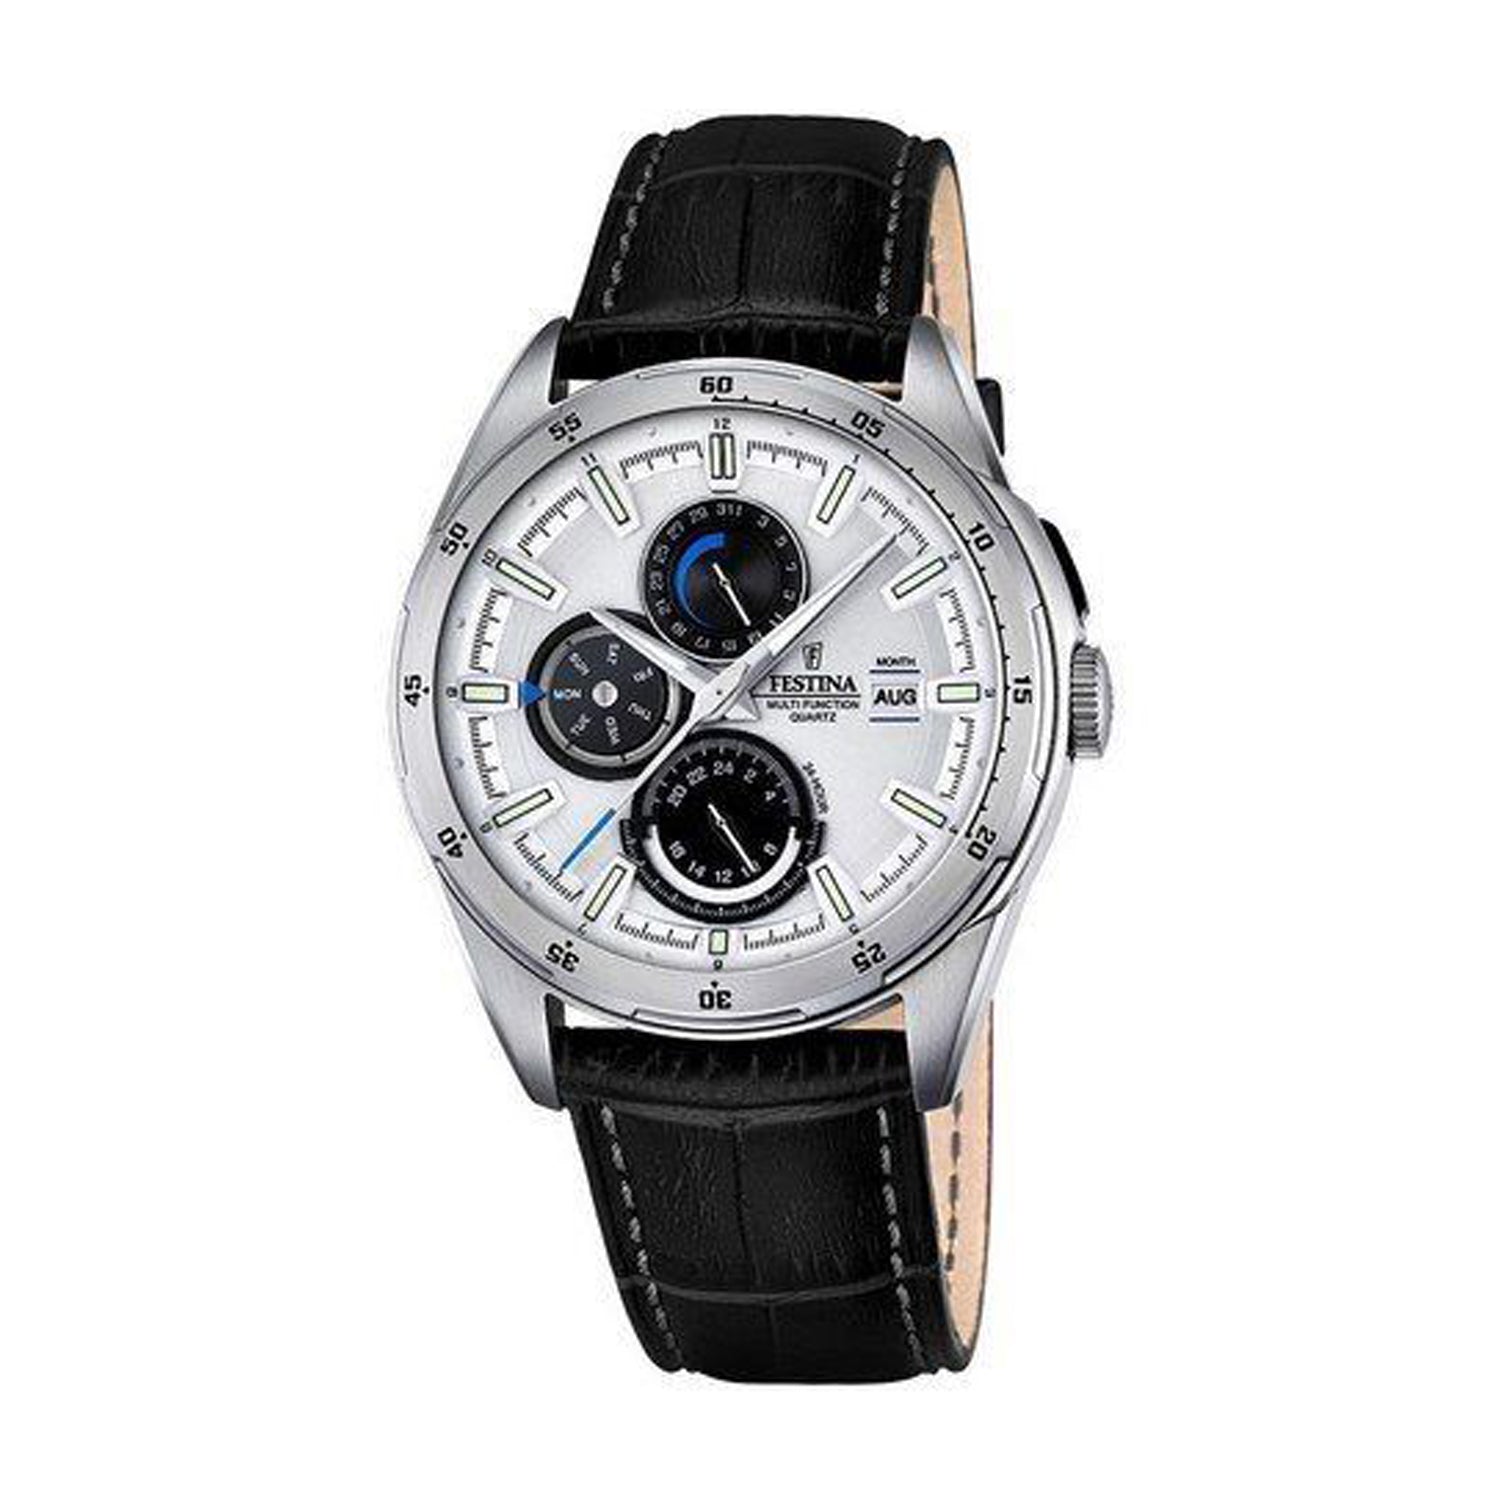 Men\'s watch, quartz movement, blue dial - f20357/c